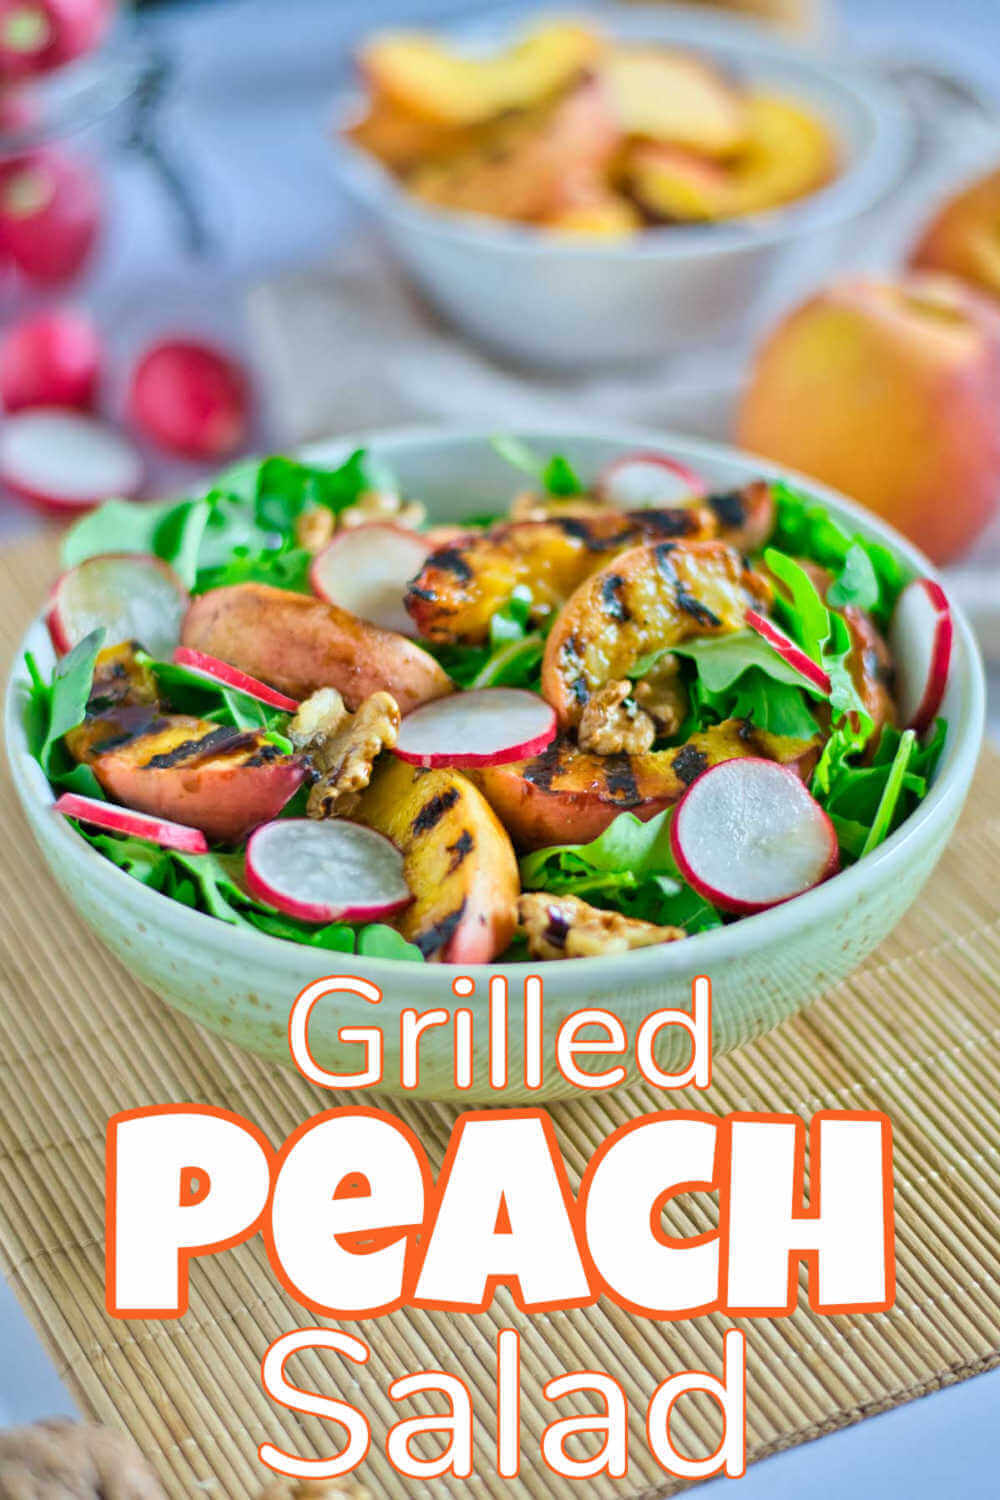 Grilled Peach and Arugula Salad